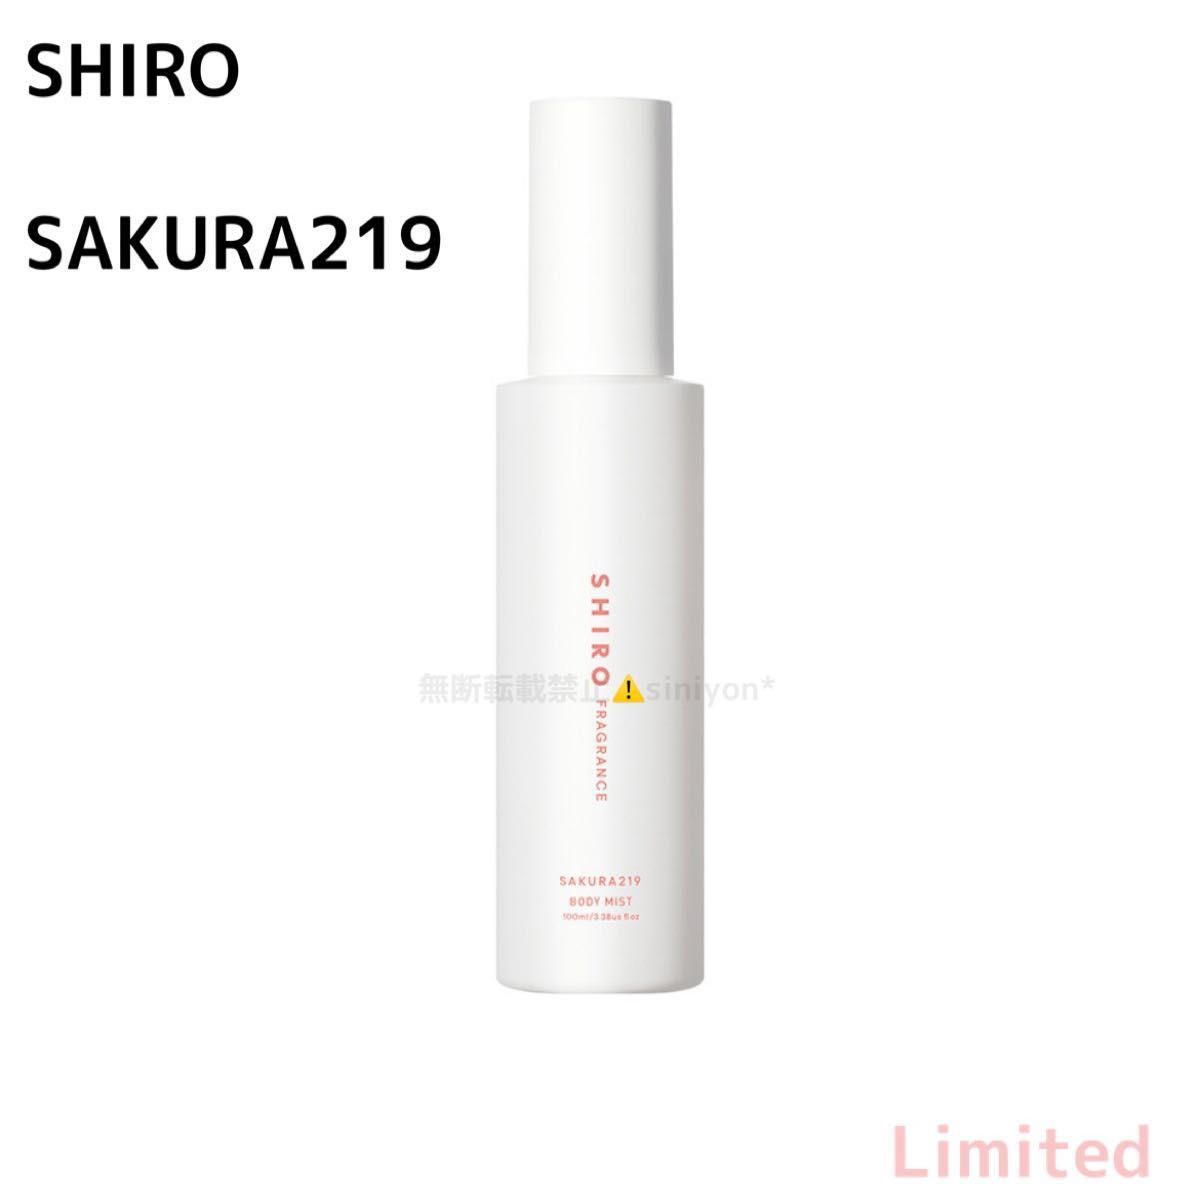 【SHIRO】サクラ219 ボディミスト 新品未使用 パッケージレス商品